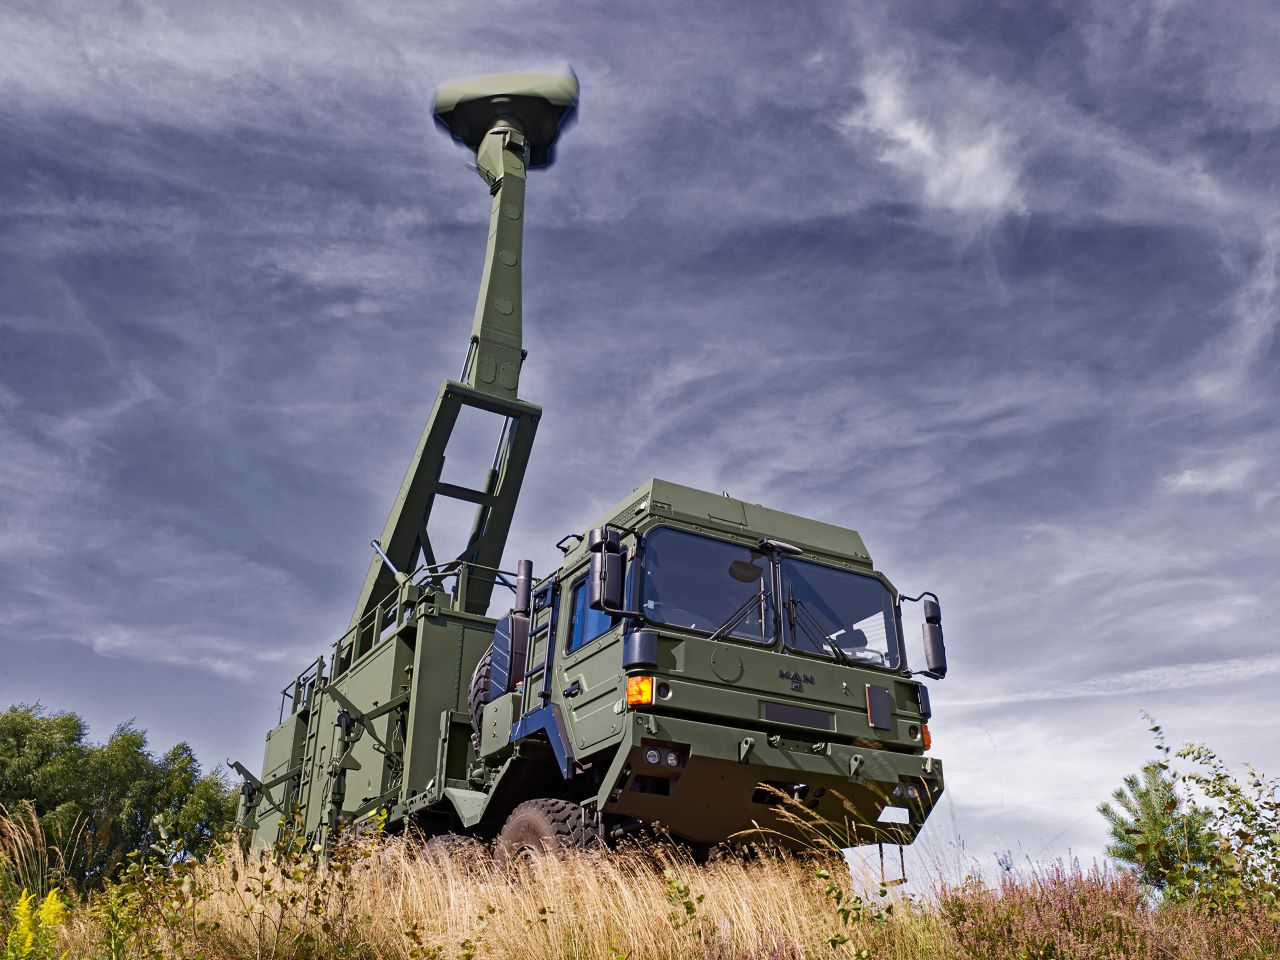 Saab Giraffe AMB (Agile Multi Beam) radar systems